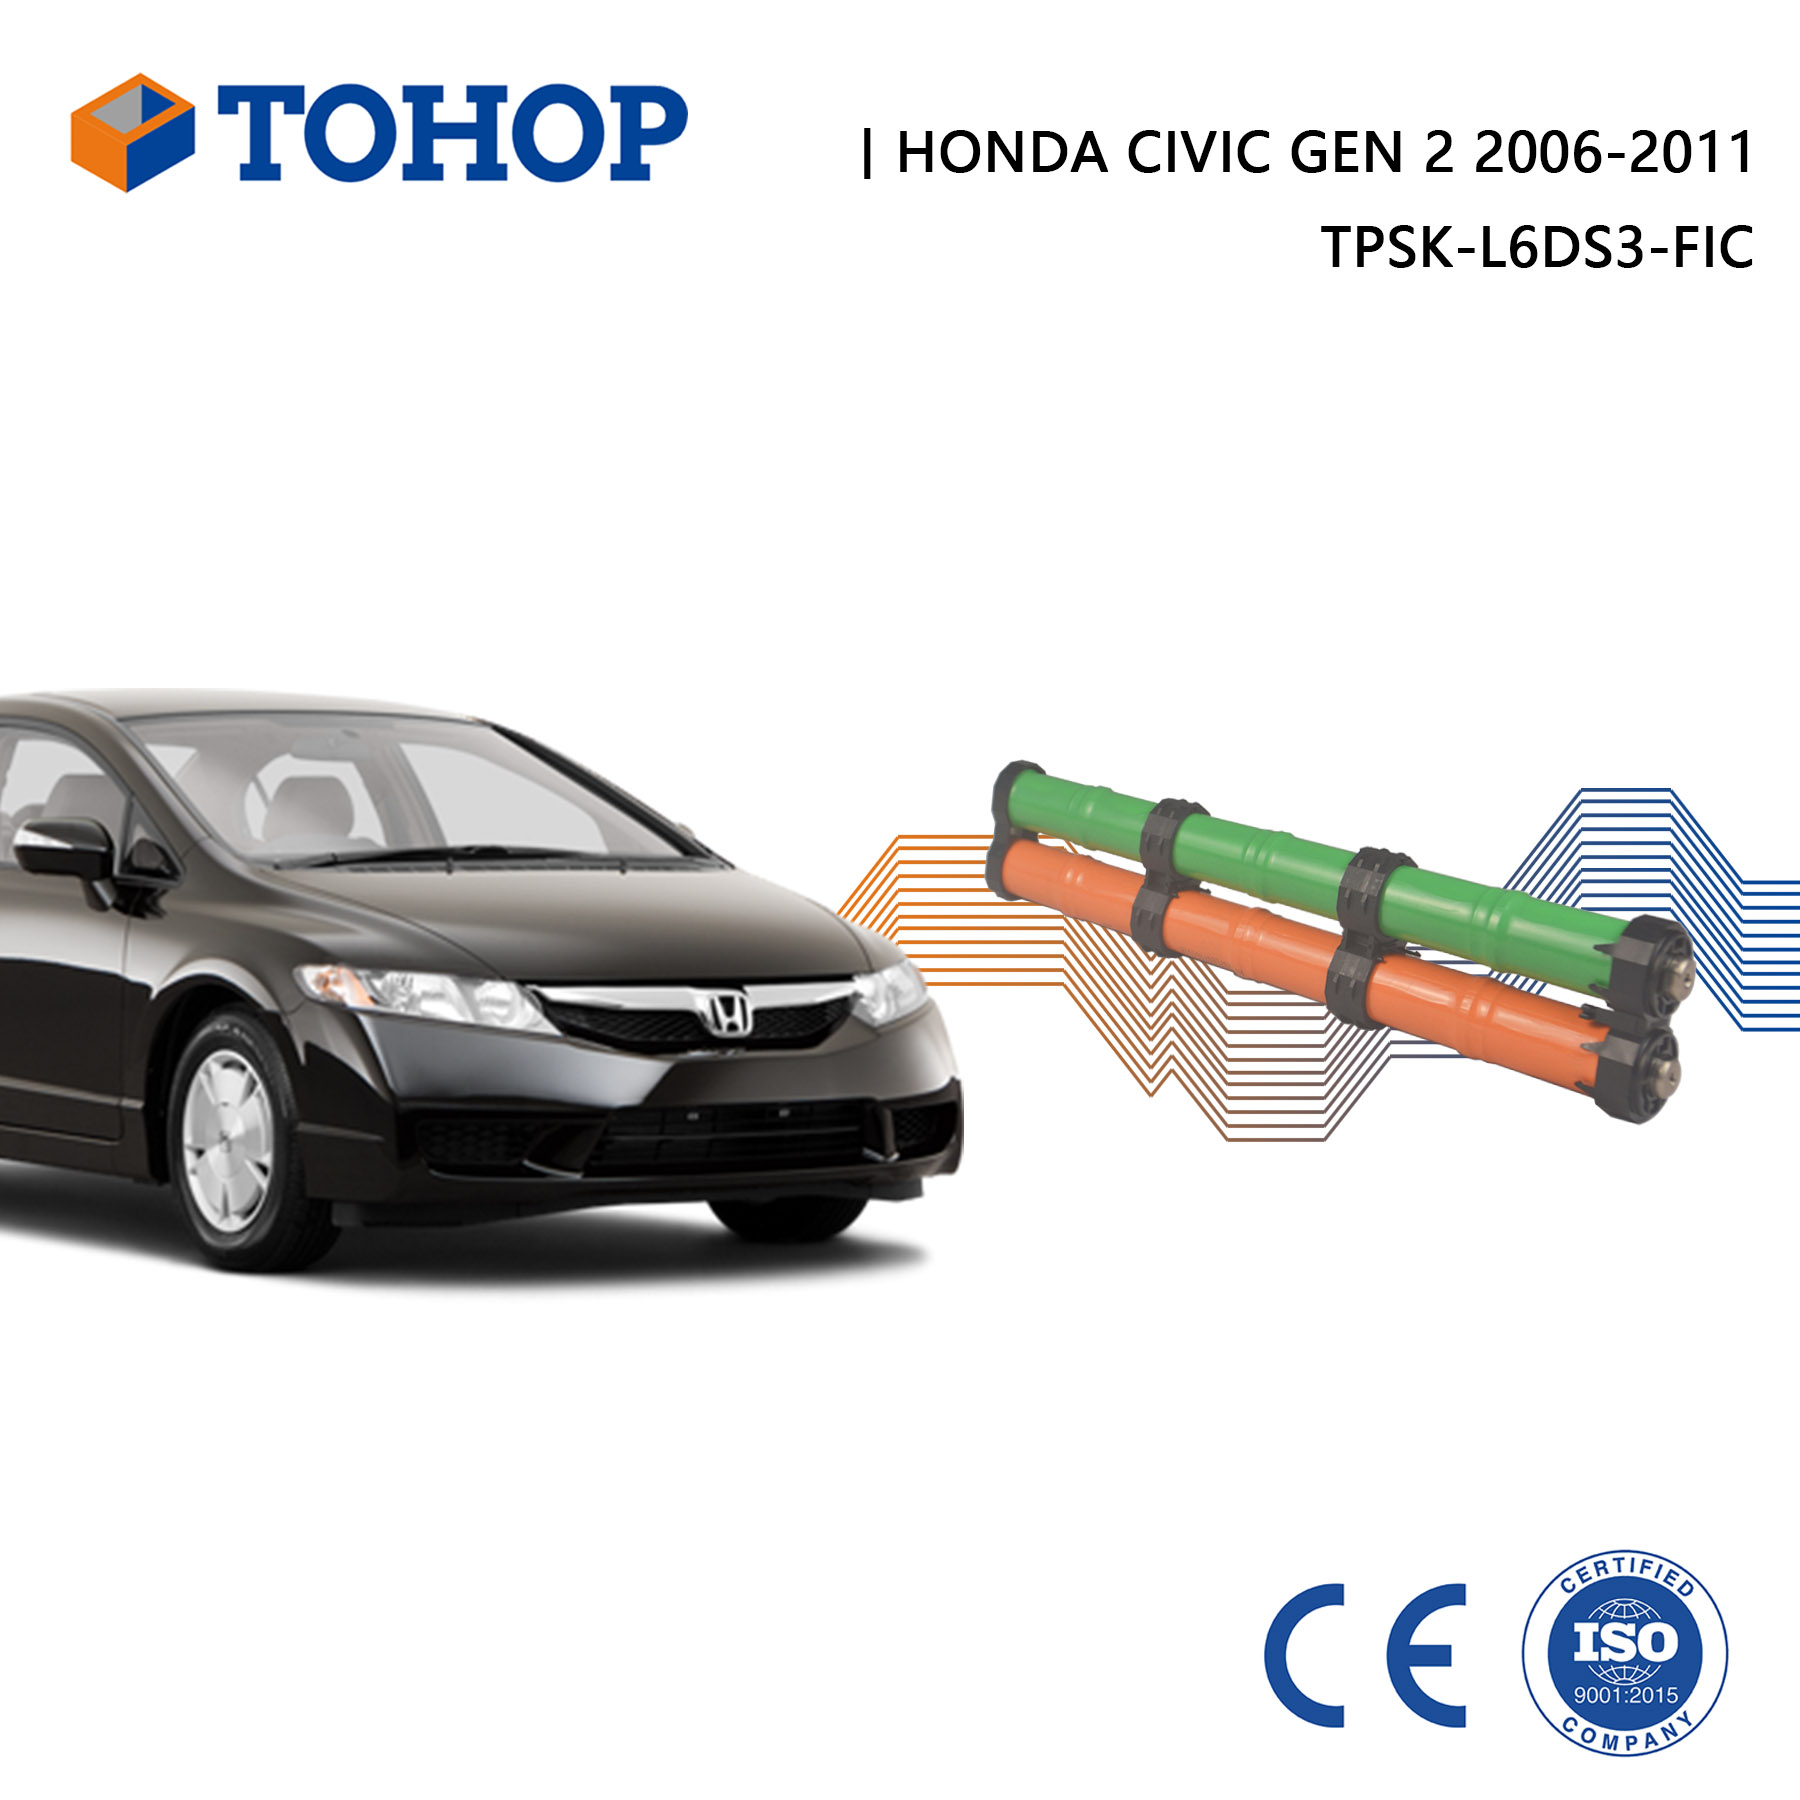 Honda Civic Gen 2 Hybridbatterie